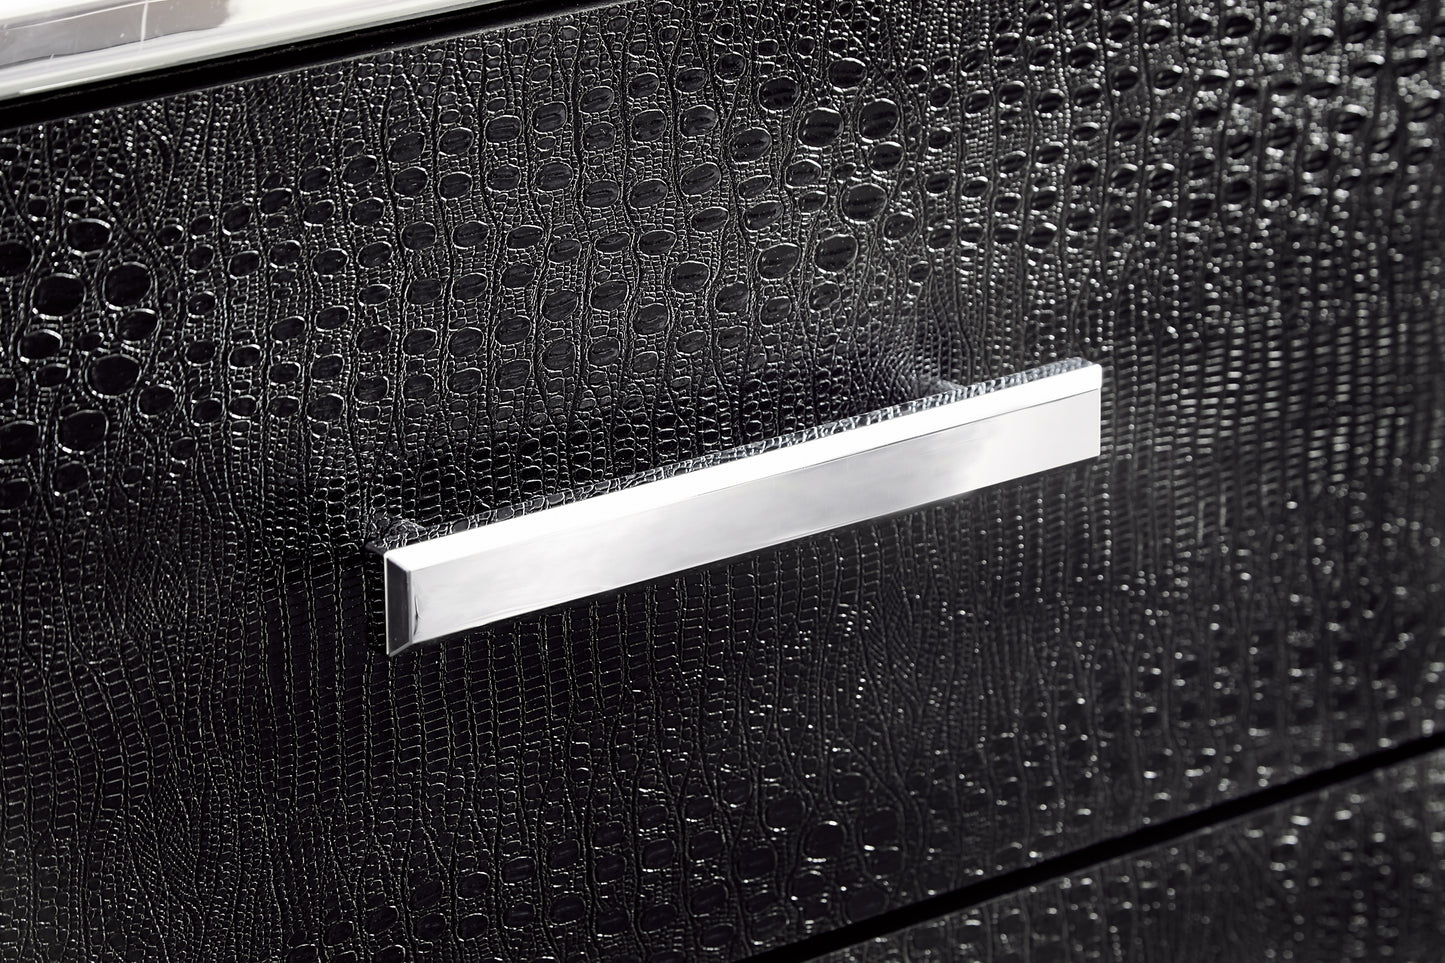 Kaydell Queen Upholstered Panel Storage Platform Bed with Mirrored Dresser